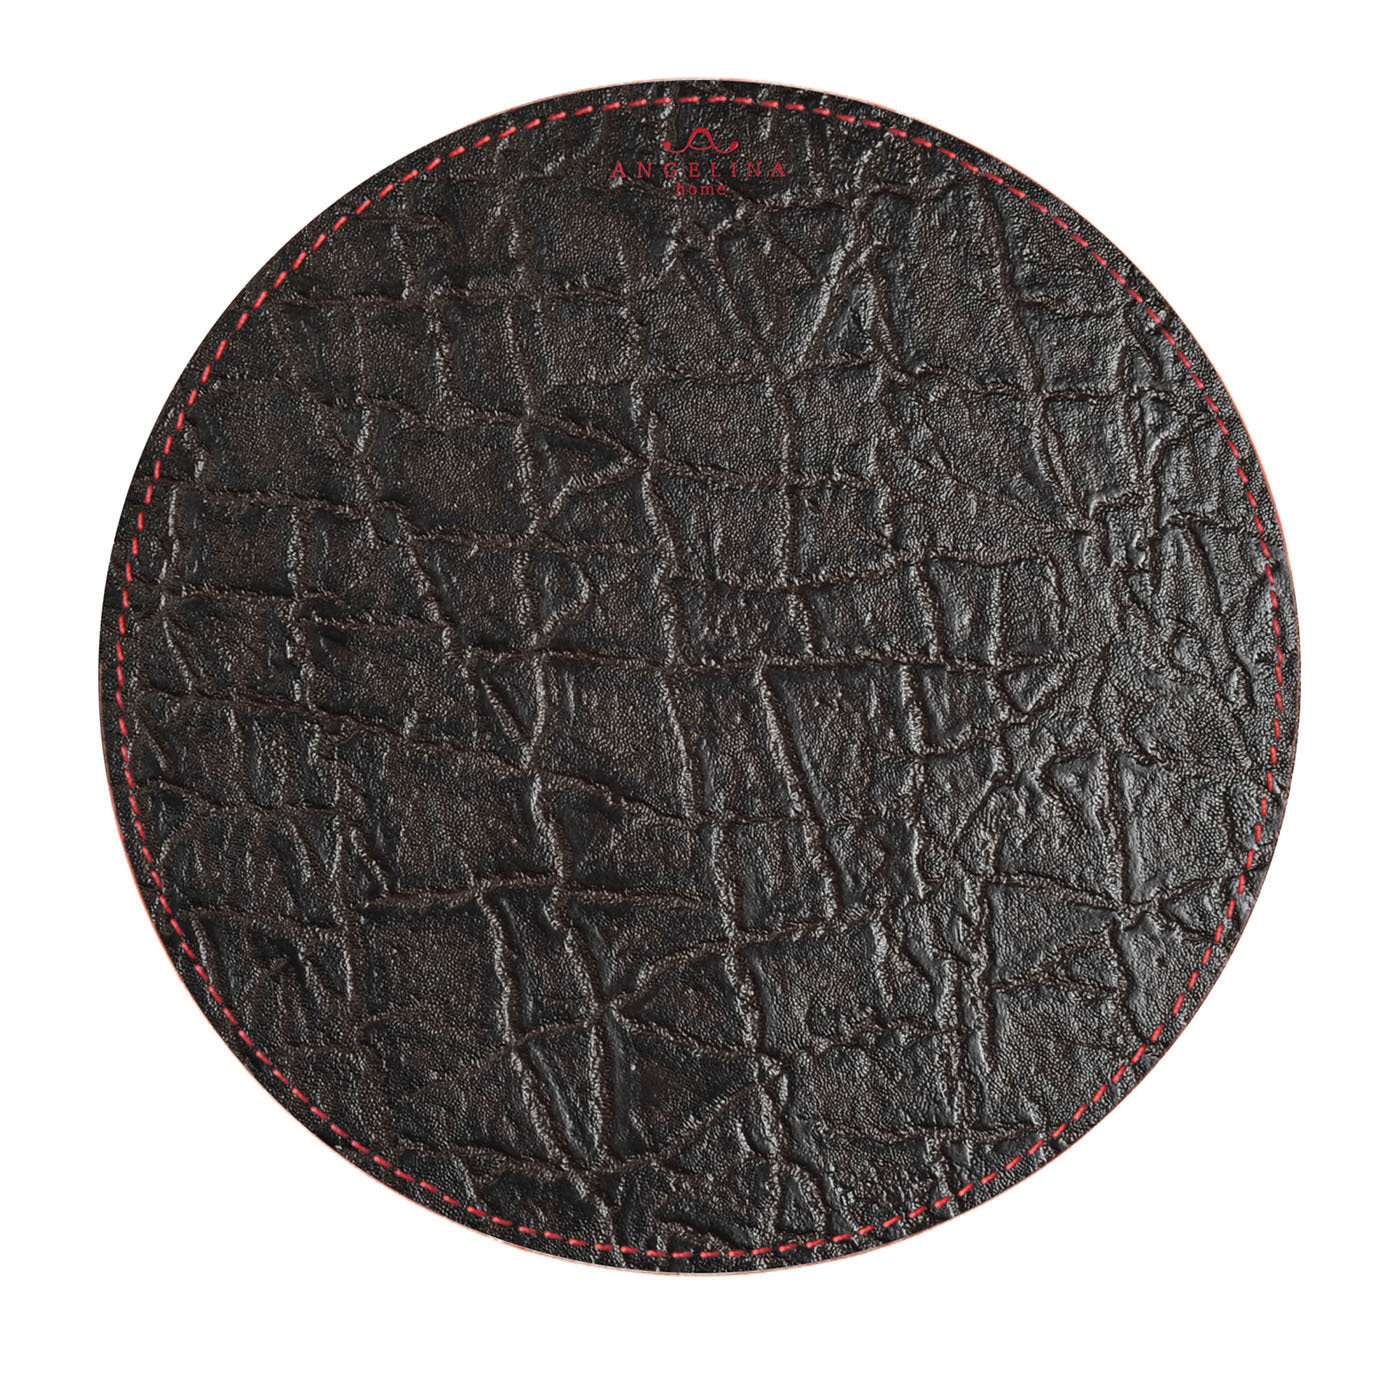 Tanzania Medium Set of 2 Round Black Leather Placemats - Alternative view 2